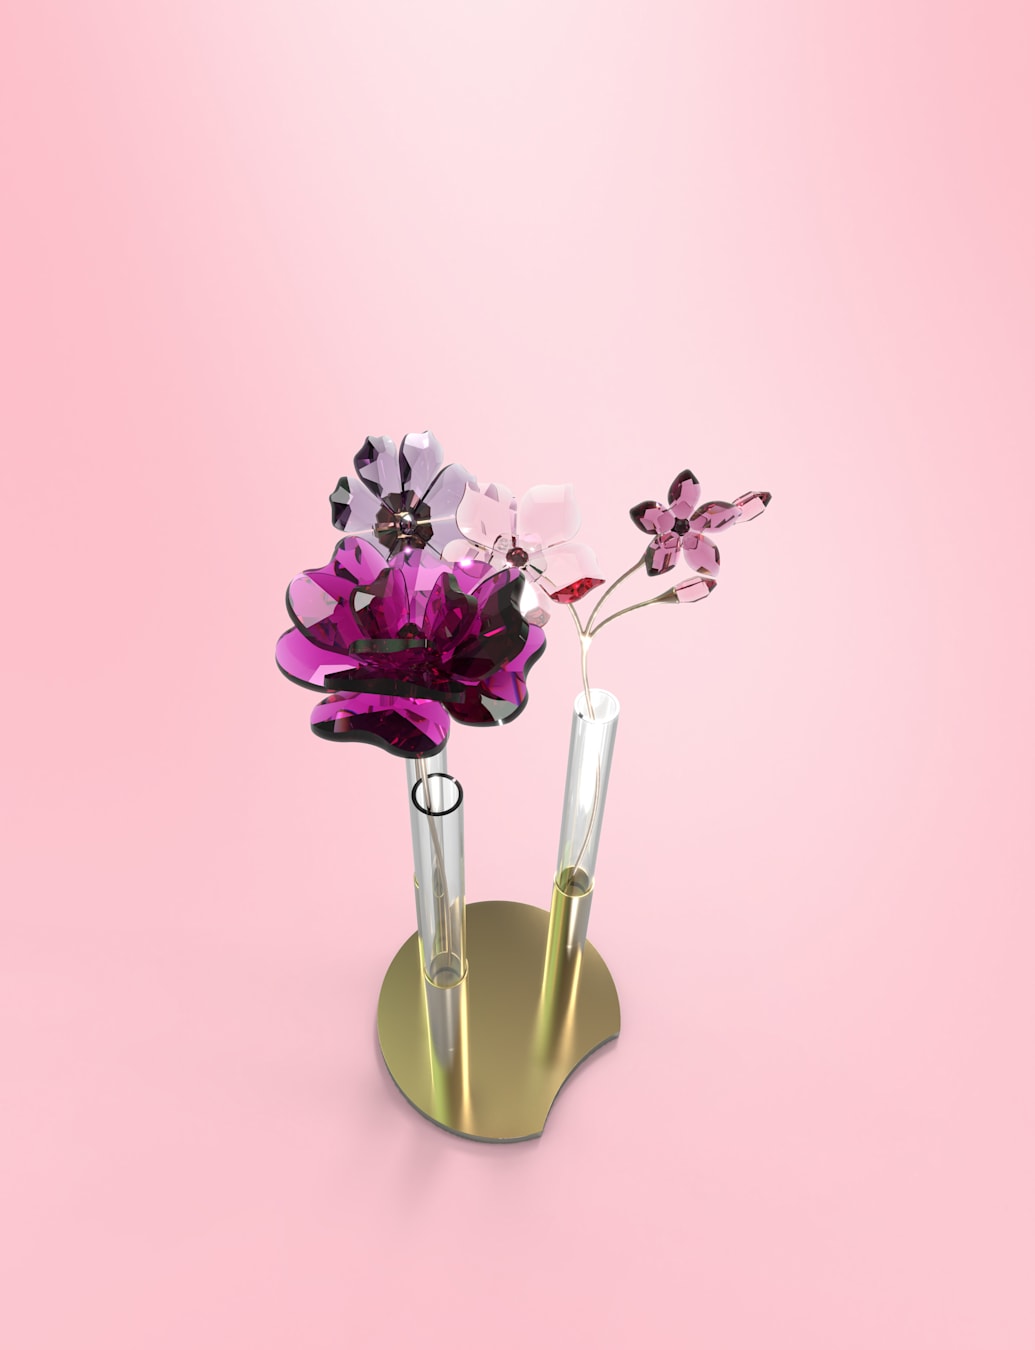 Crystal flowers inspiration: Garden Tales collection | Swarovski US